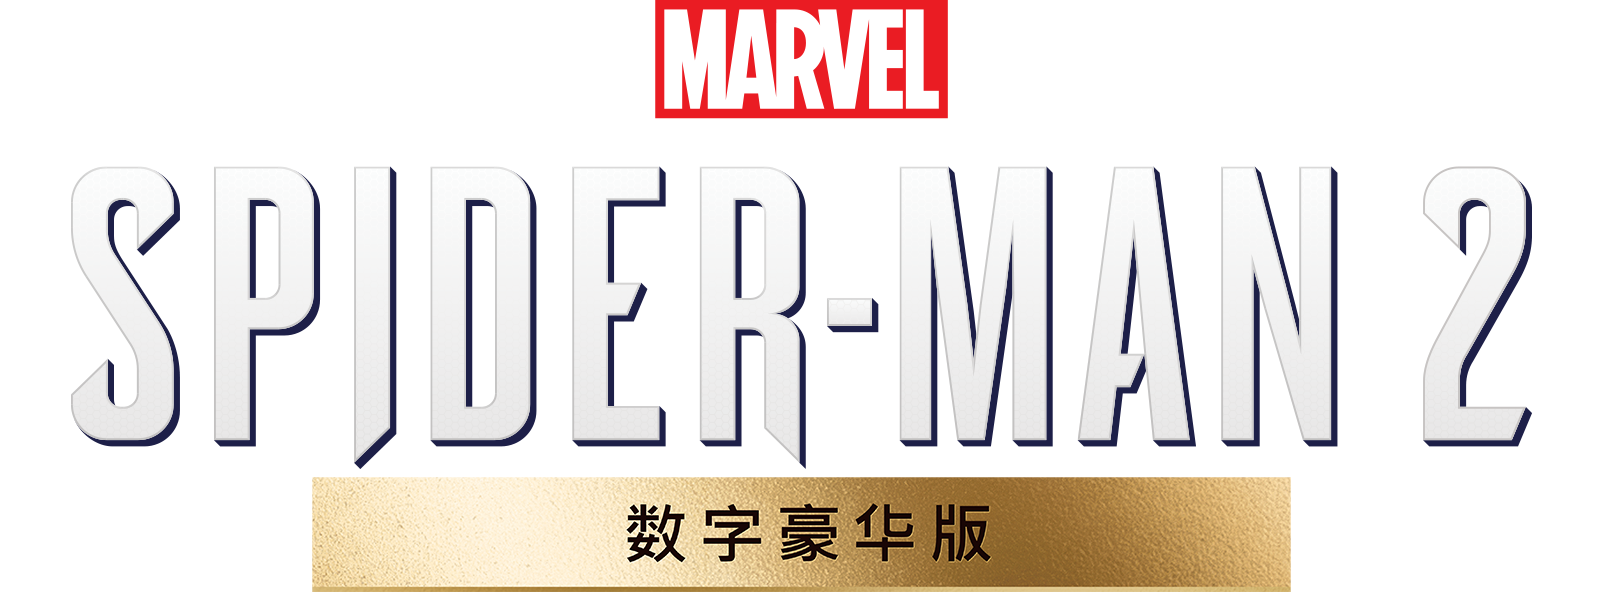 Marvel's Spider-Man 2》数字豪华版(泰语, 韩语, 简体中文, 繁体中文 